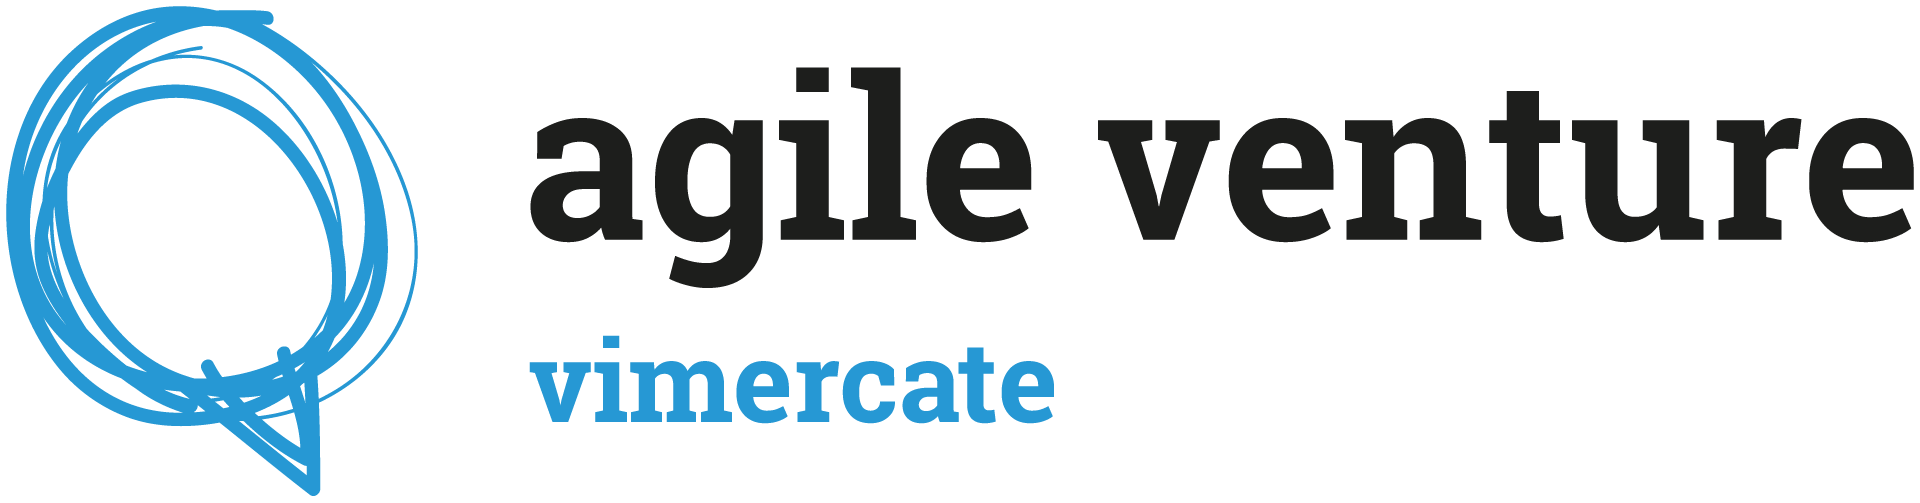 agile venture Vimercate